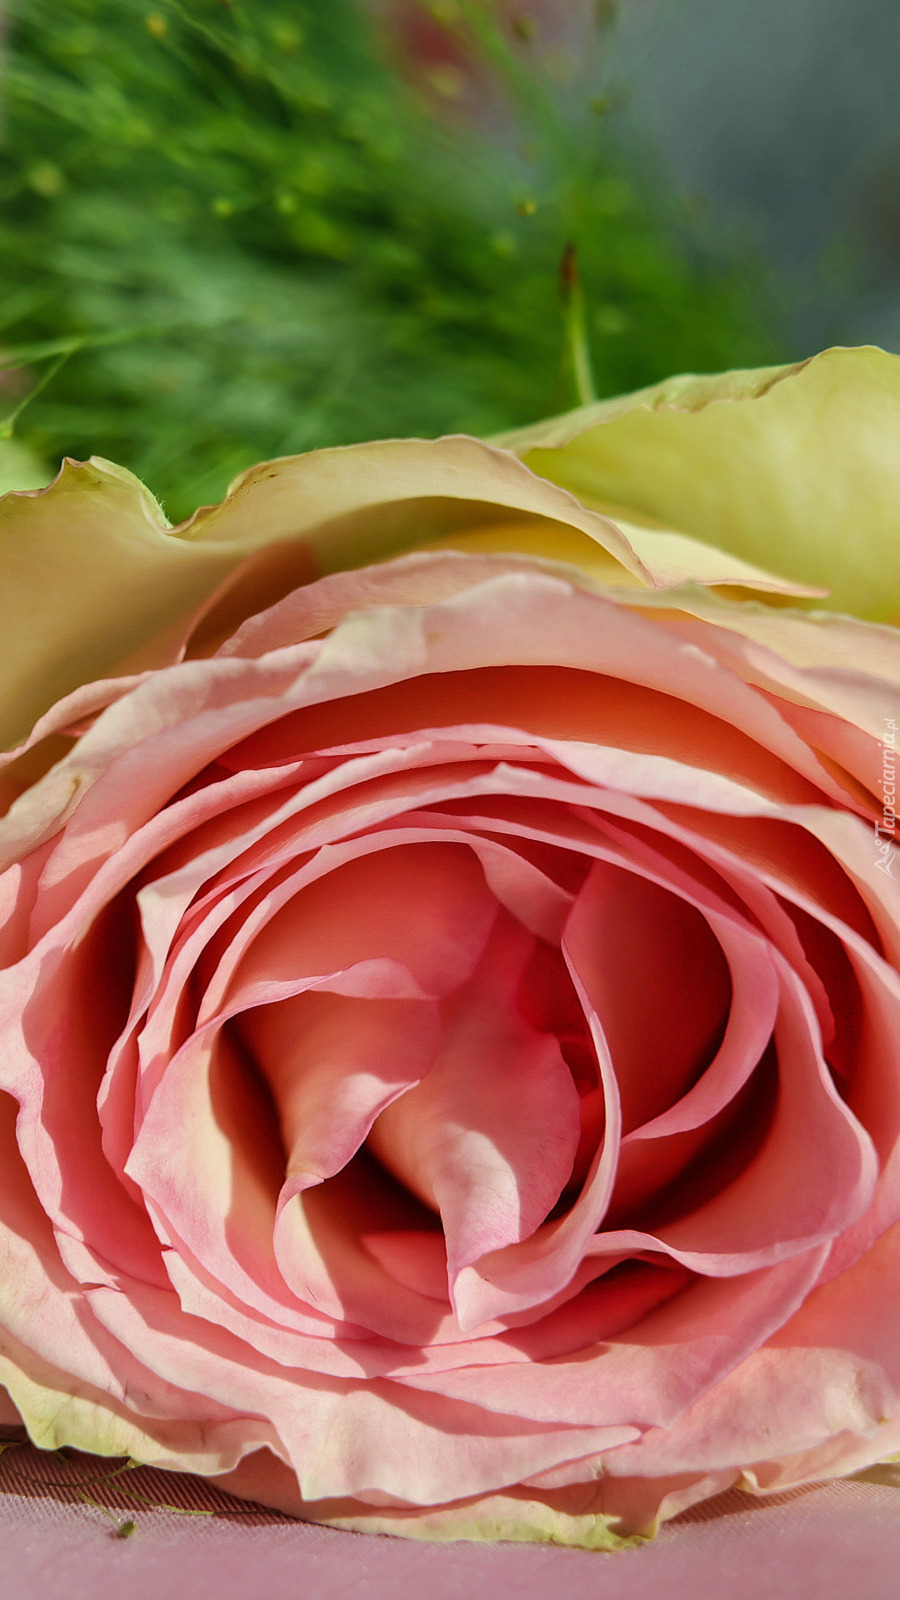 Różowo-żółta róża